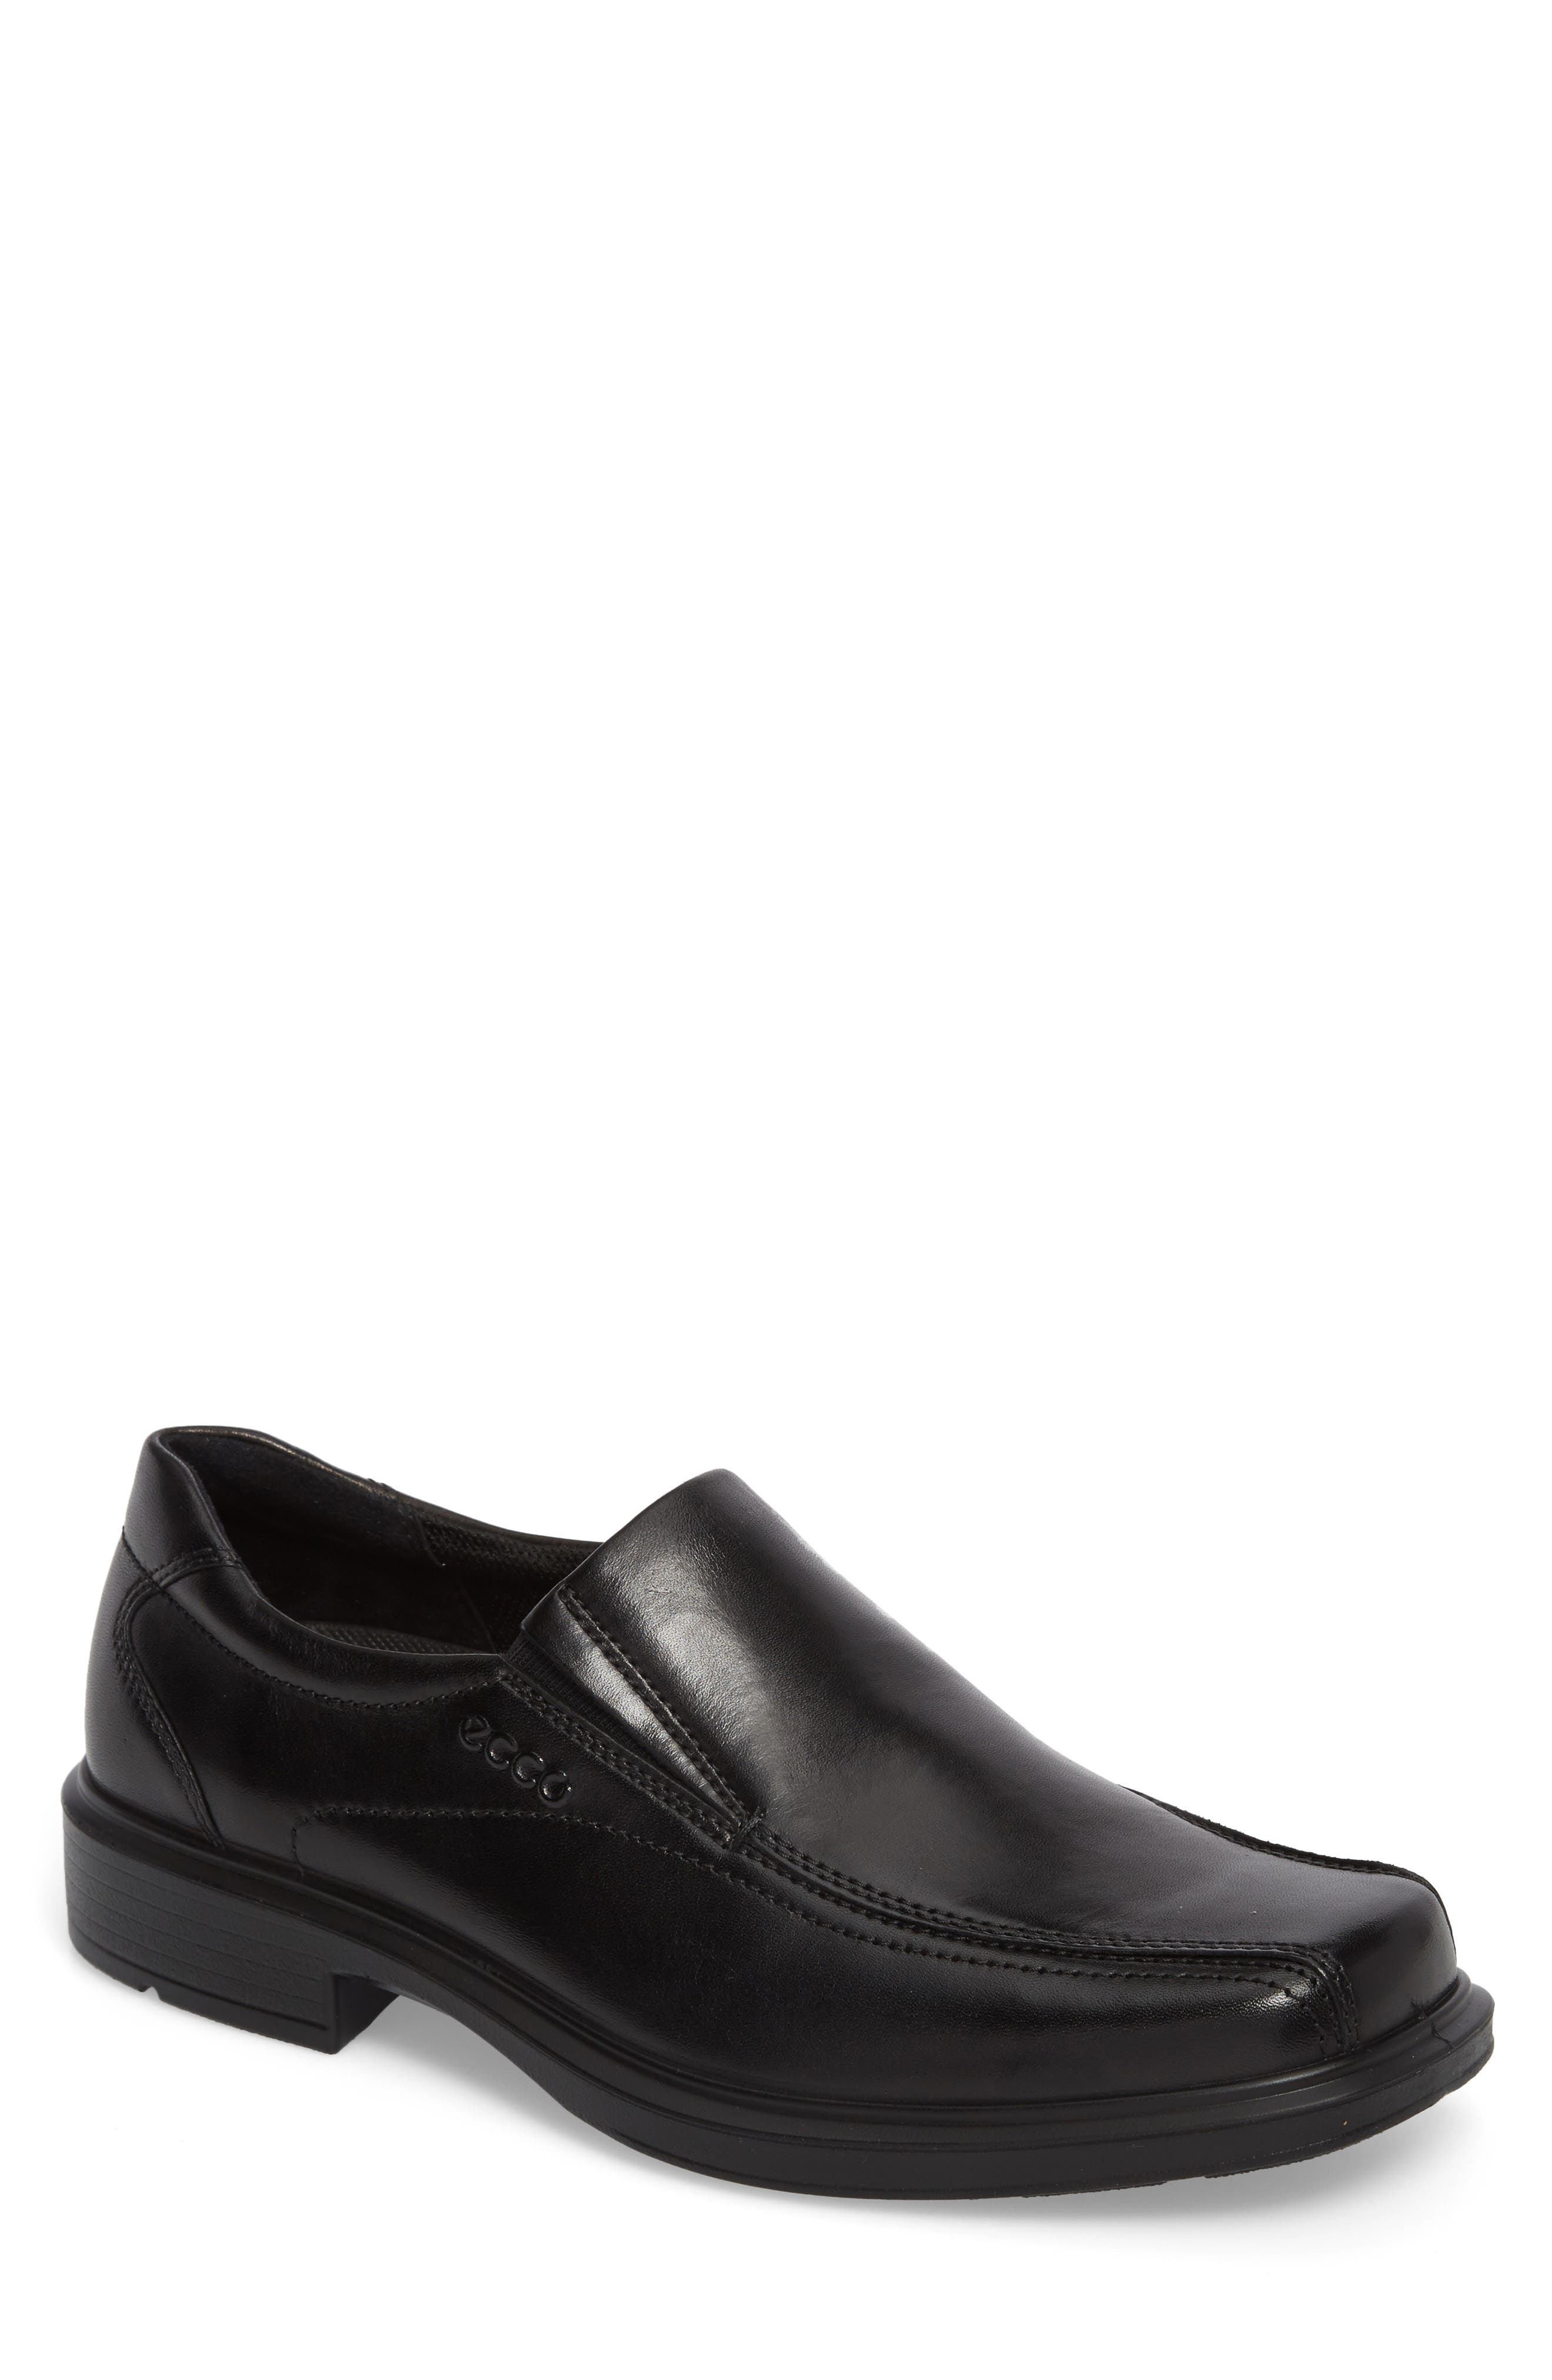 Men's Slip-Ons Dress Shoes | Nordstrom